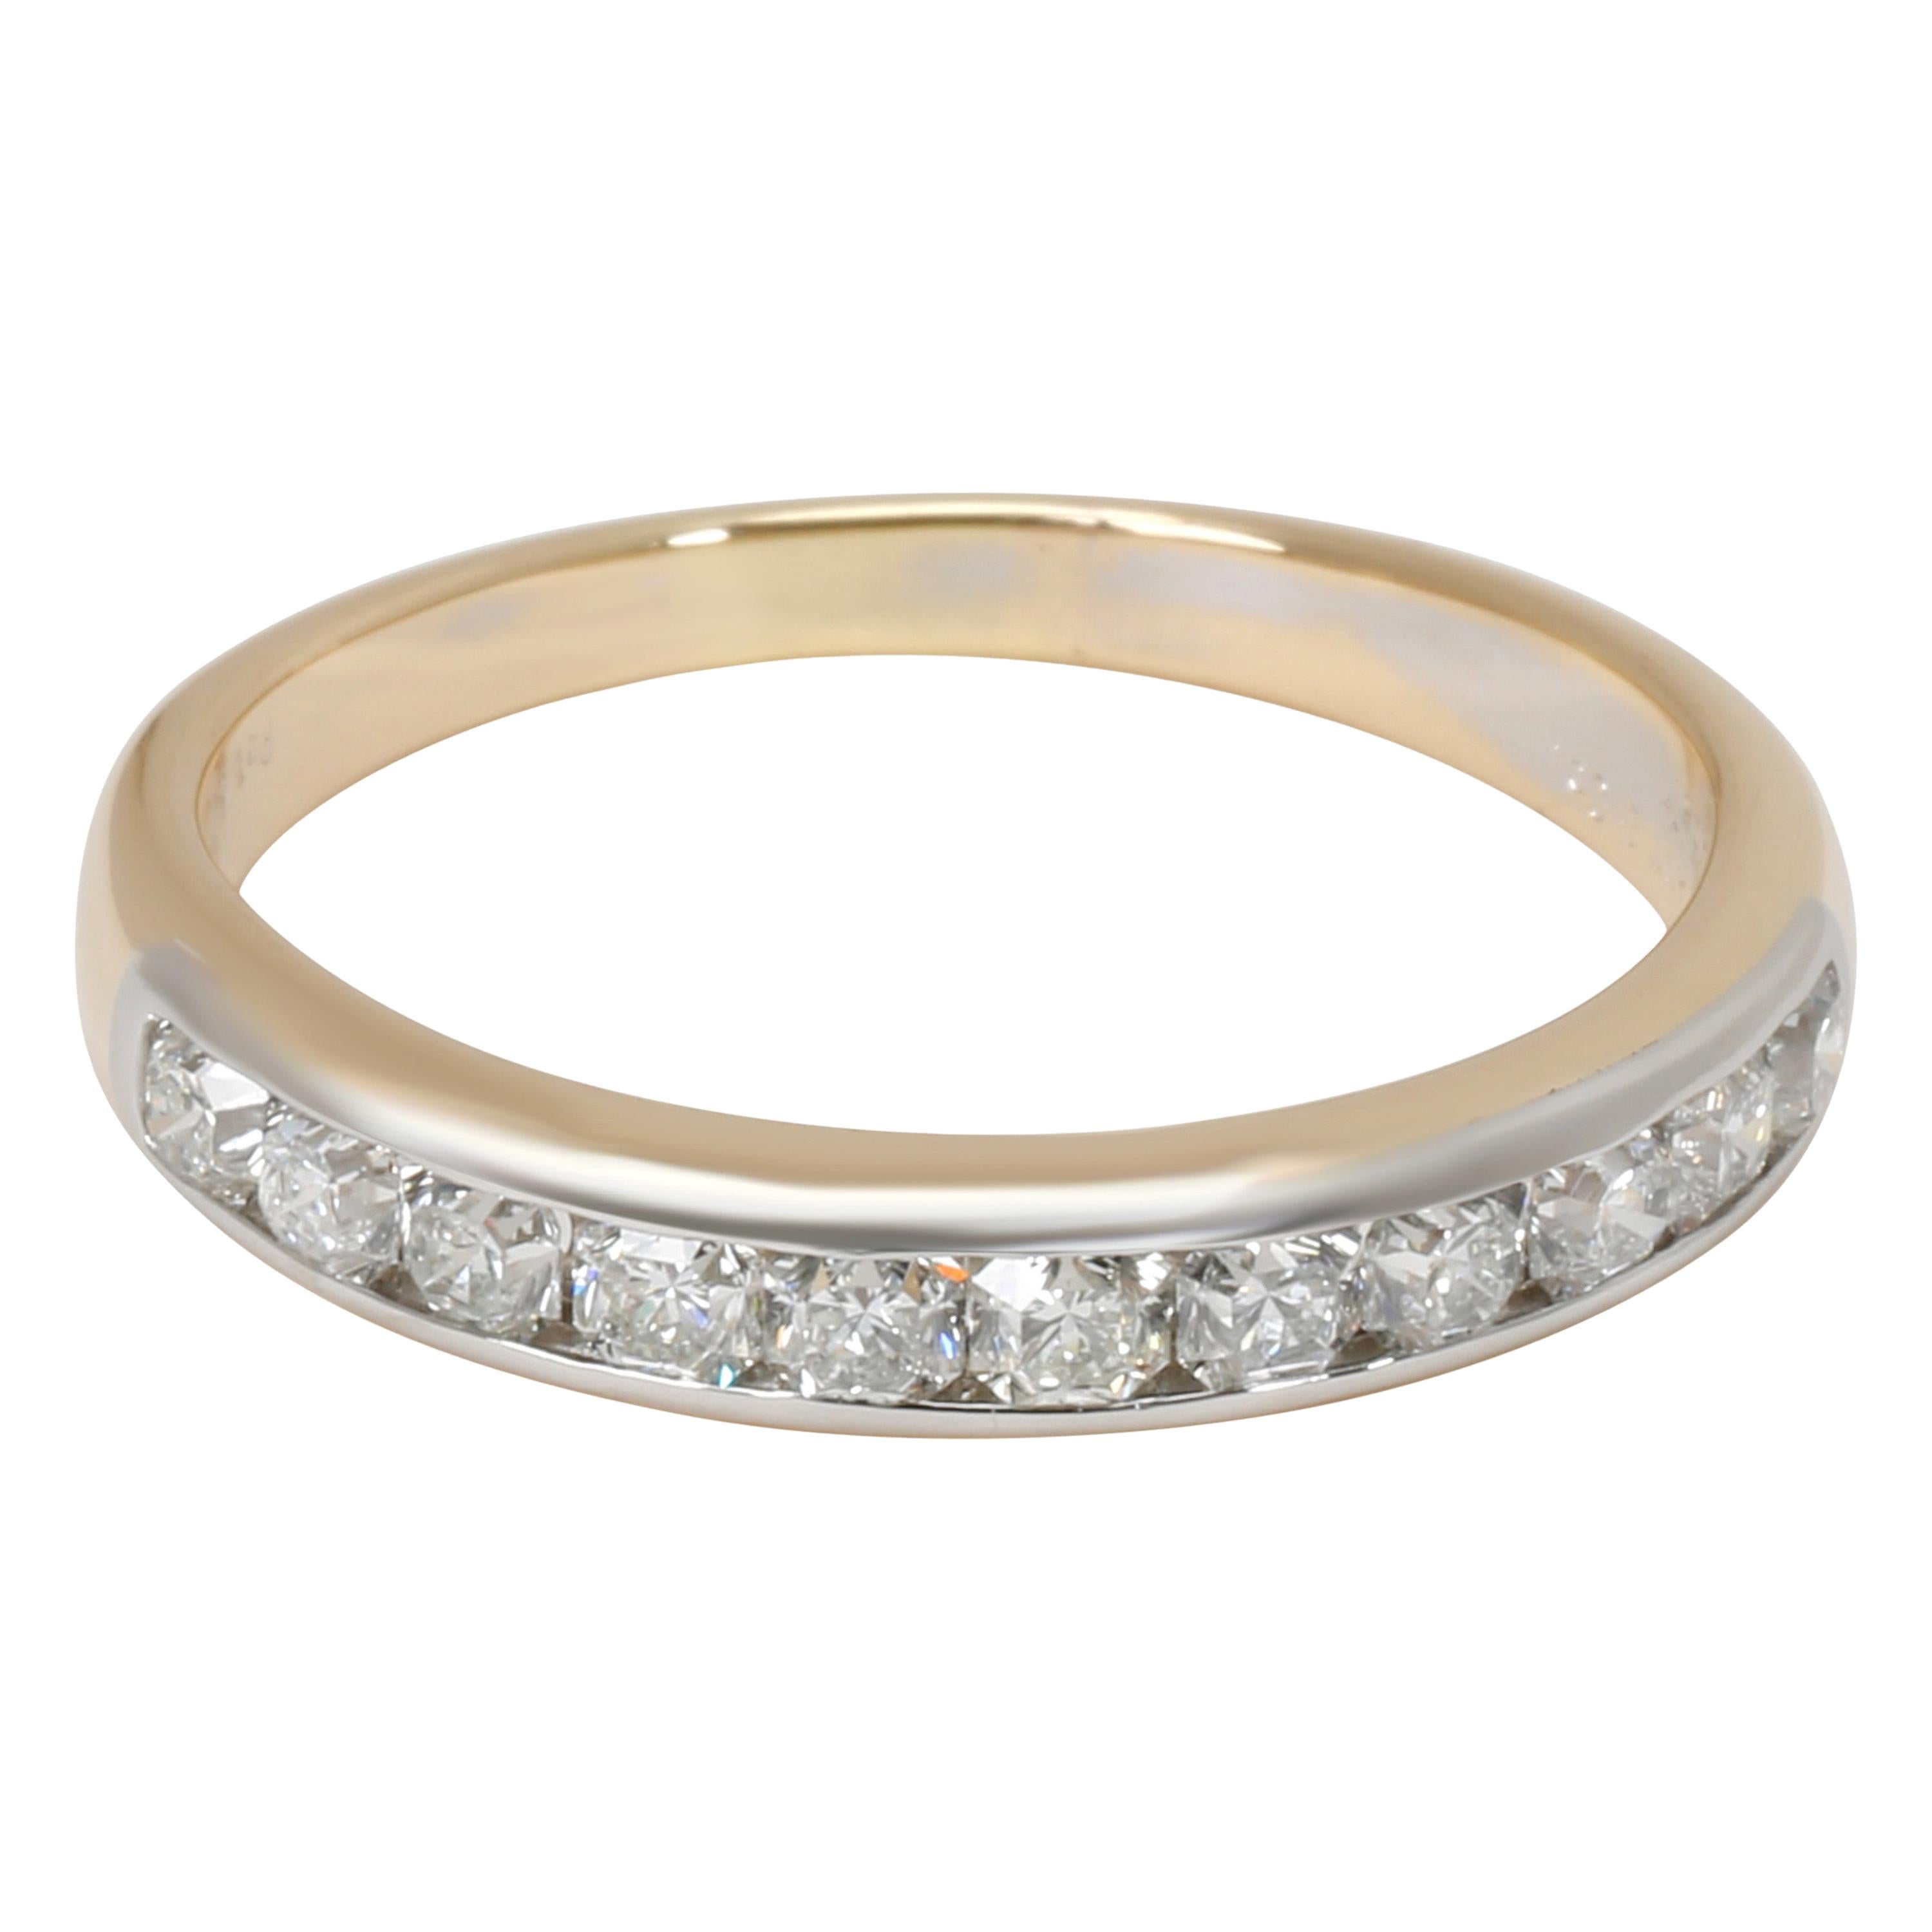 Tiffany & Co. Lucida Diamond Wedding Band in 18K Gold and Platinum '0.55 Carat'